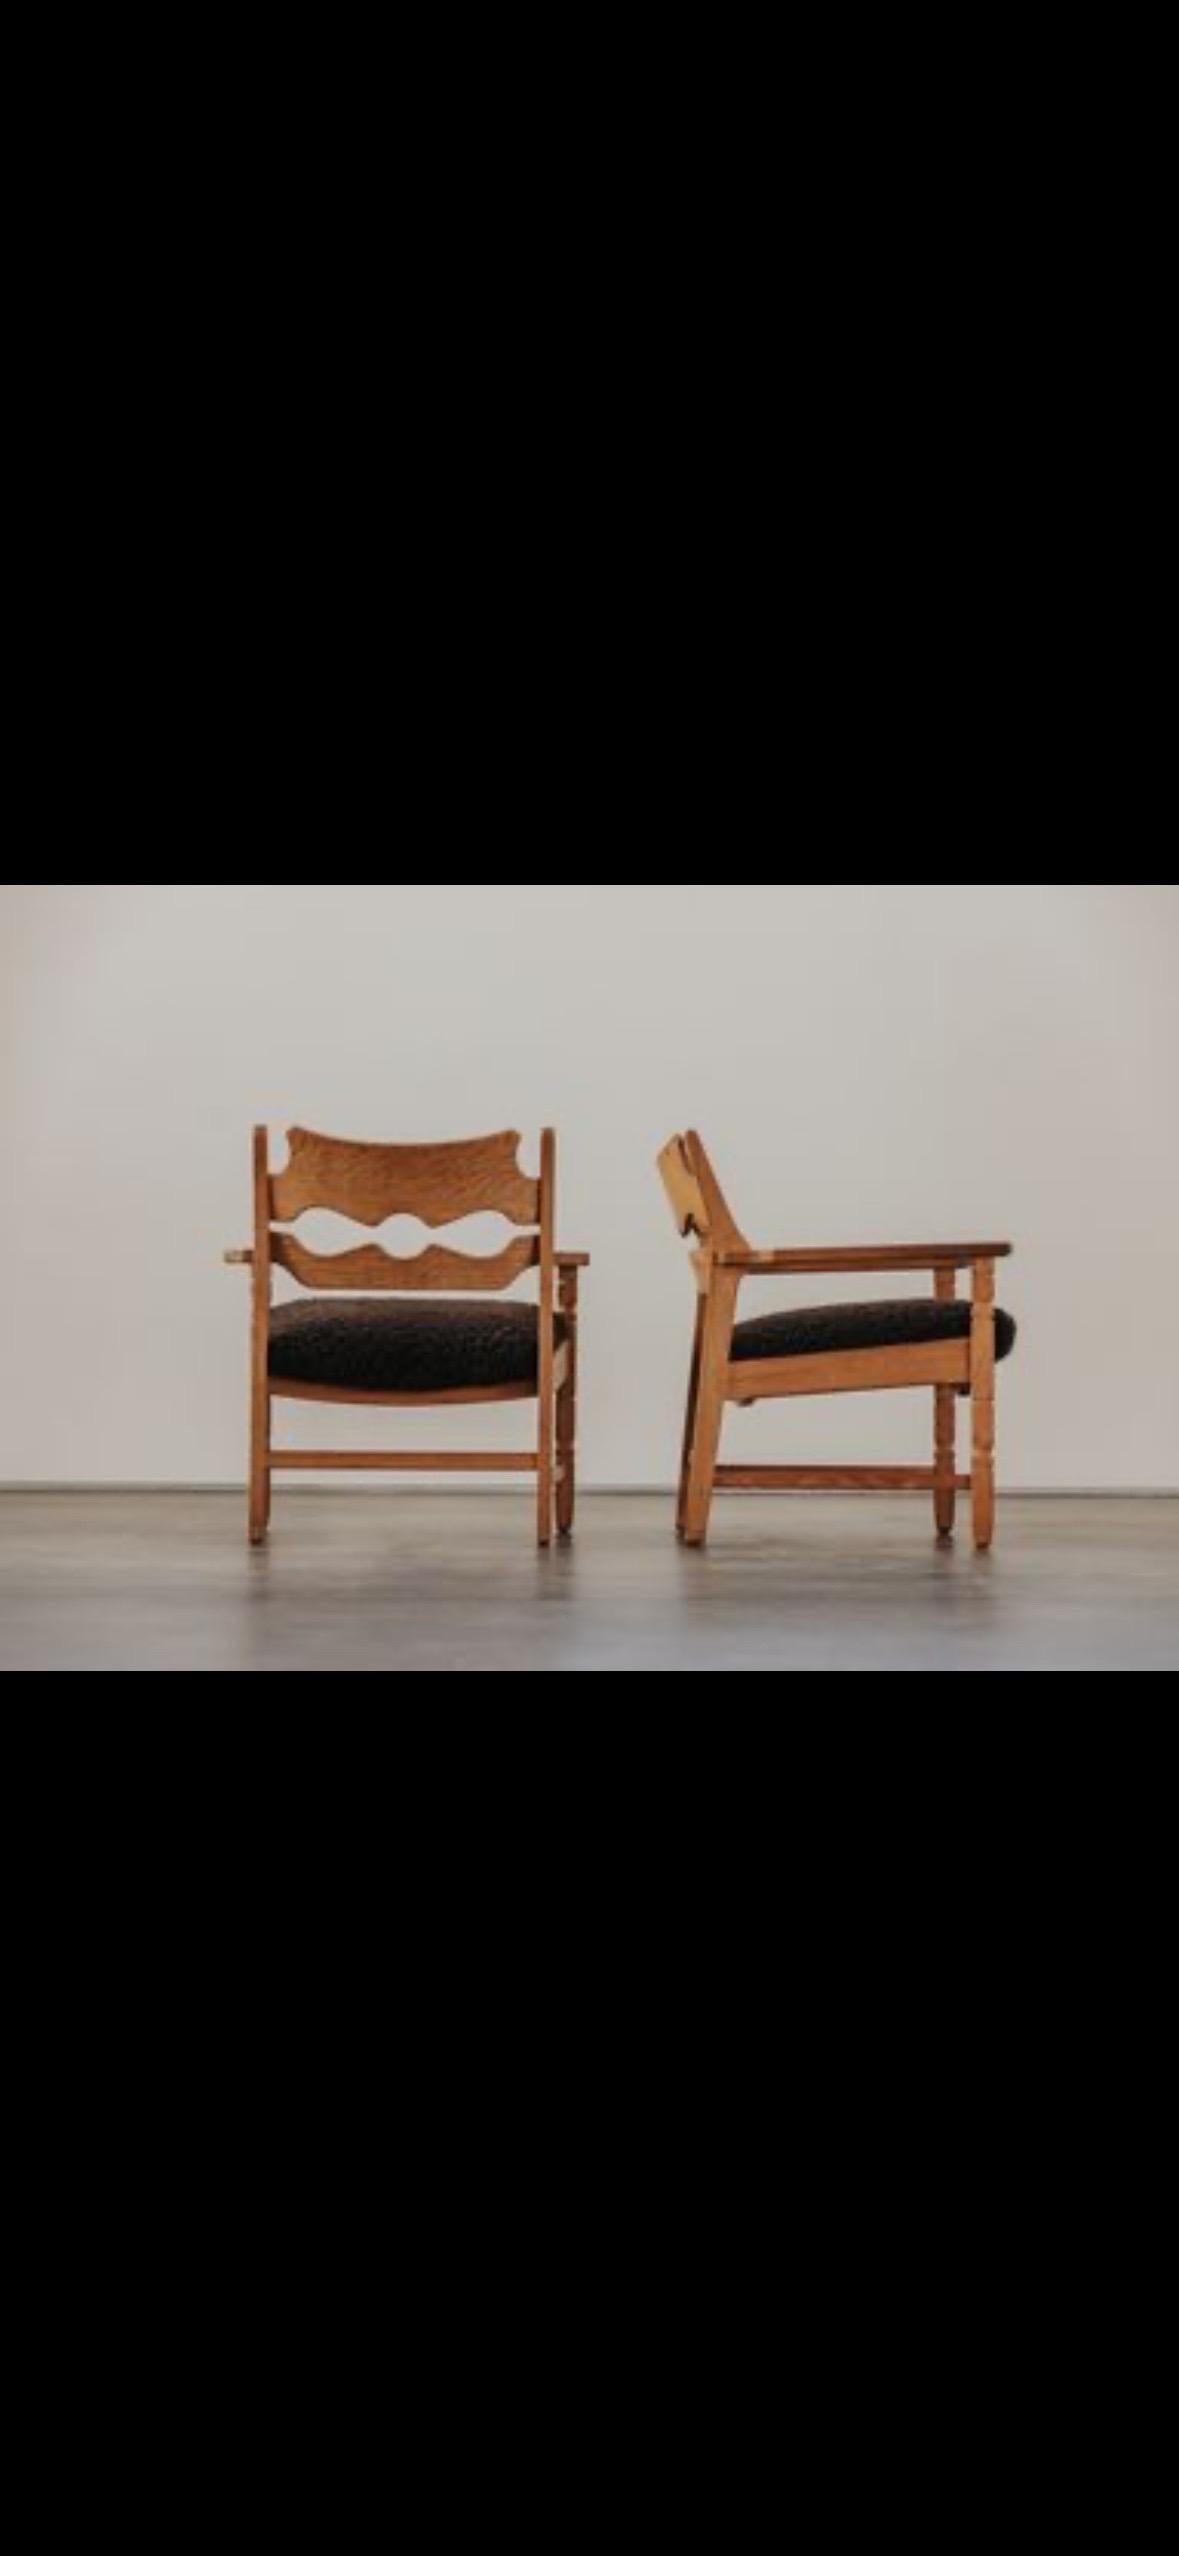 Vintage Razor Chairs from Denmark